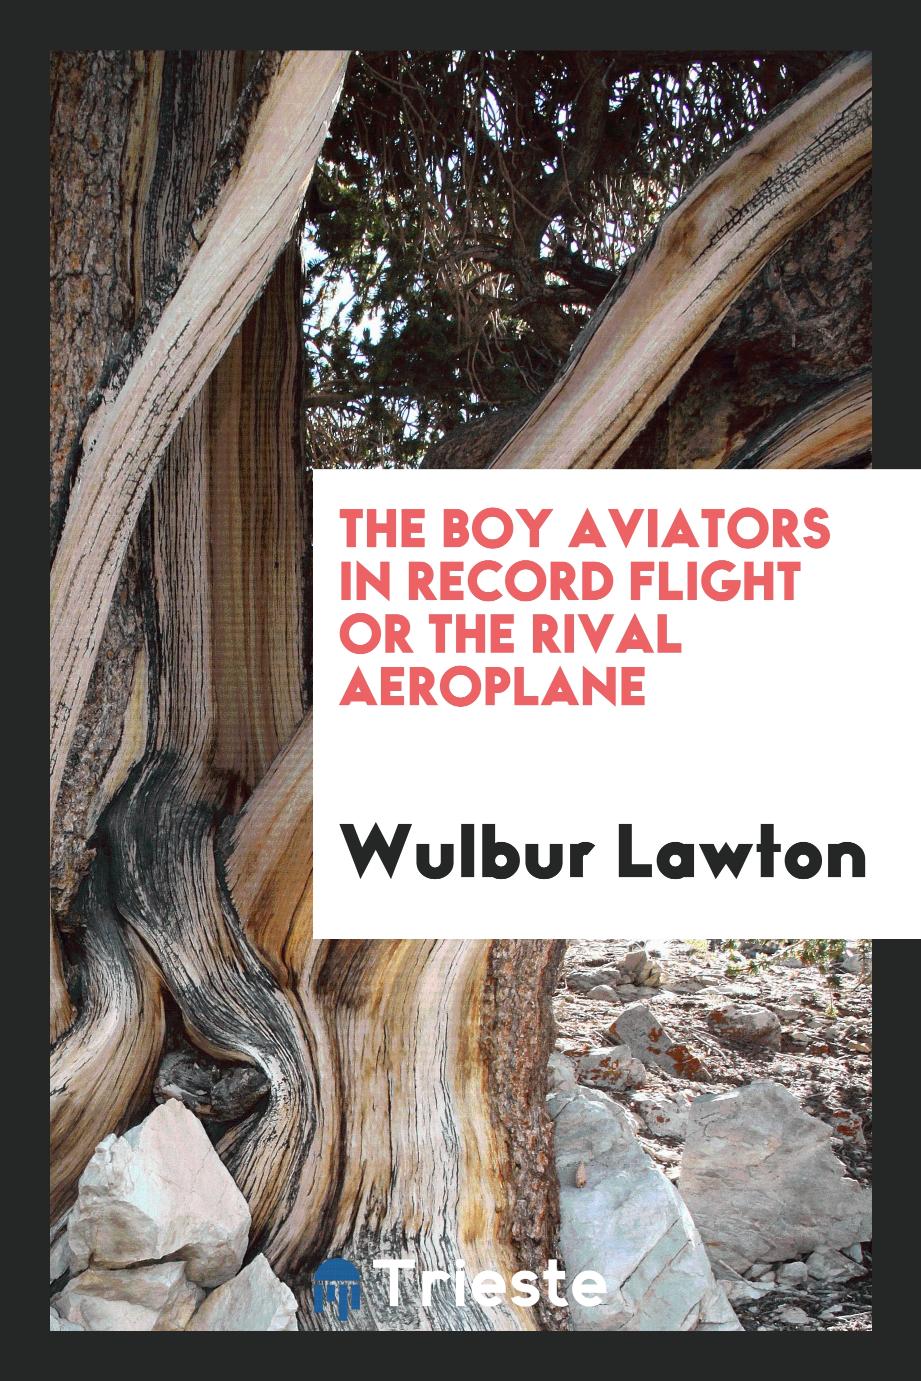 The boy aviators in record flight or The rival aeroplane